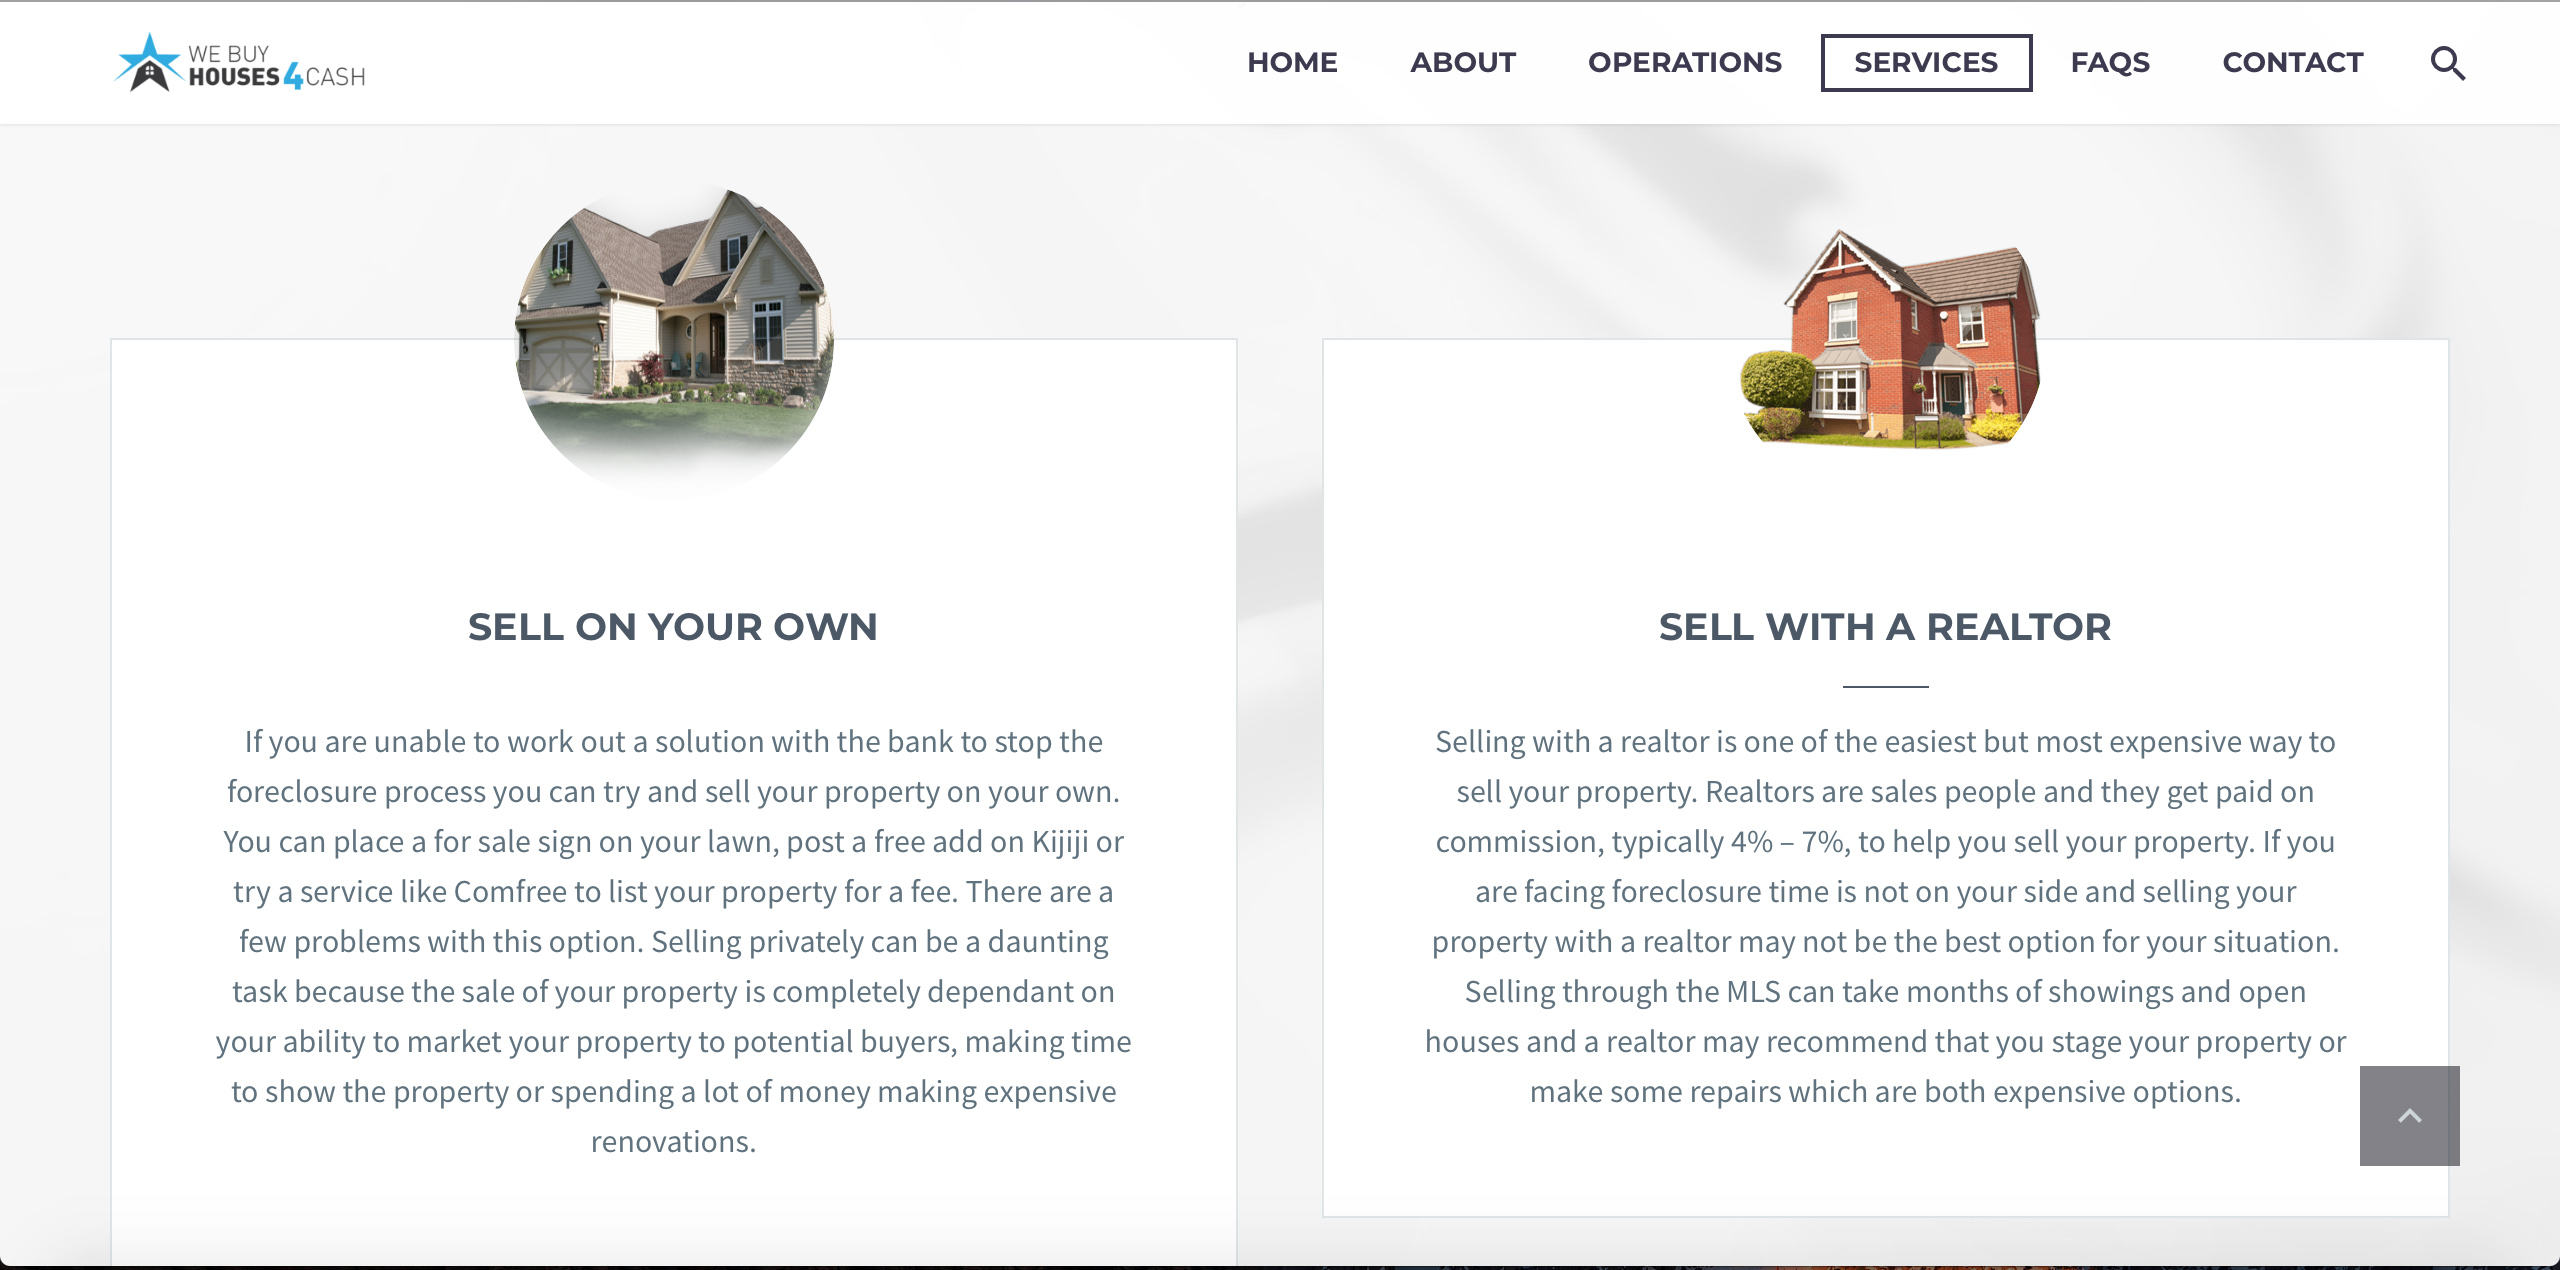 We Buy Houses 4 Cash Website Cover